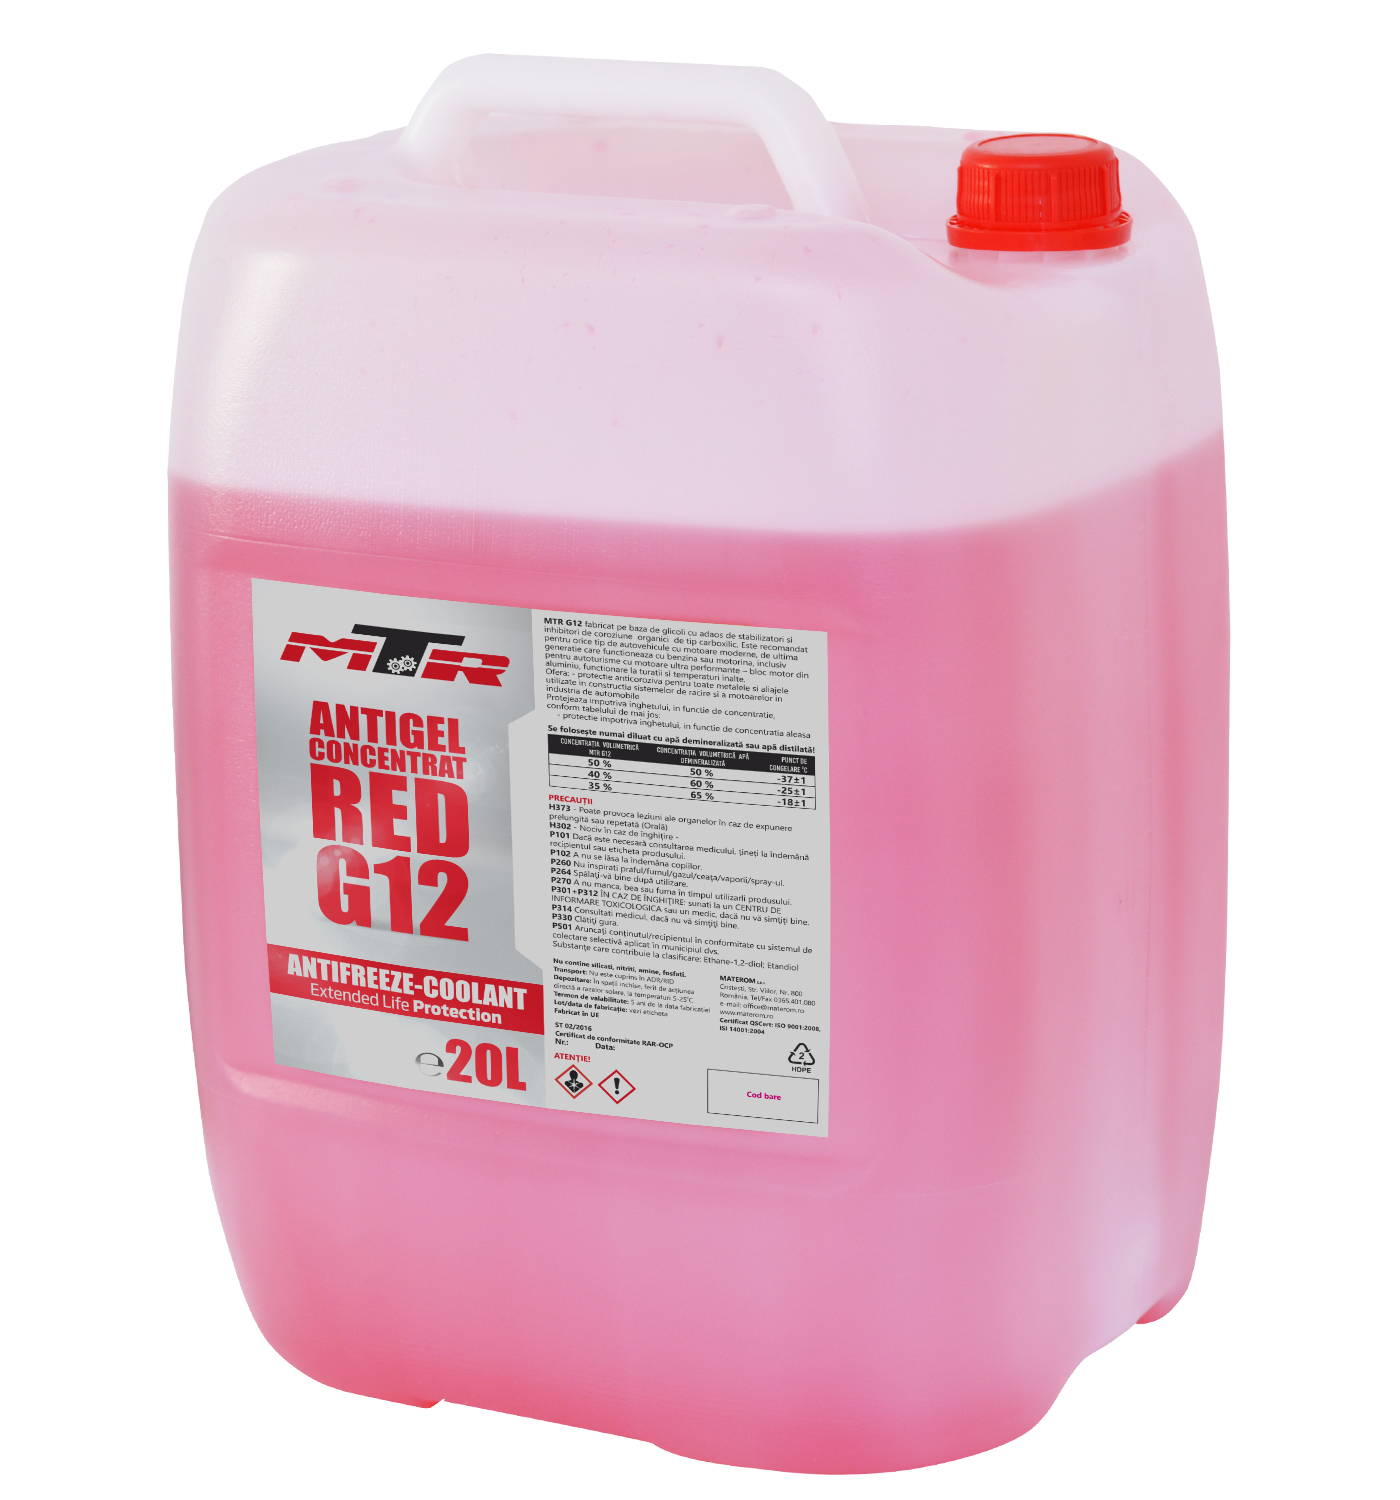 Antigel concentrat MTR rosu G12 20L